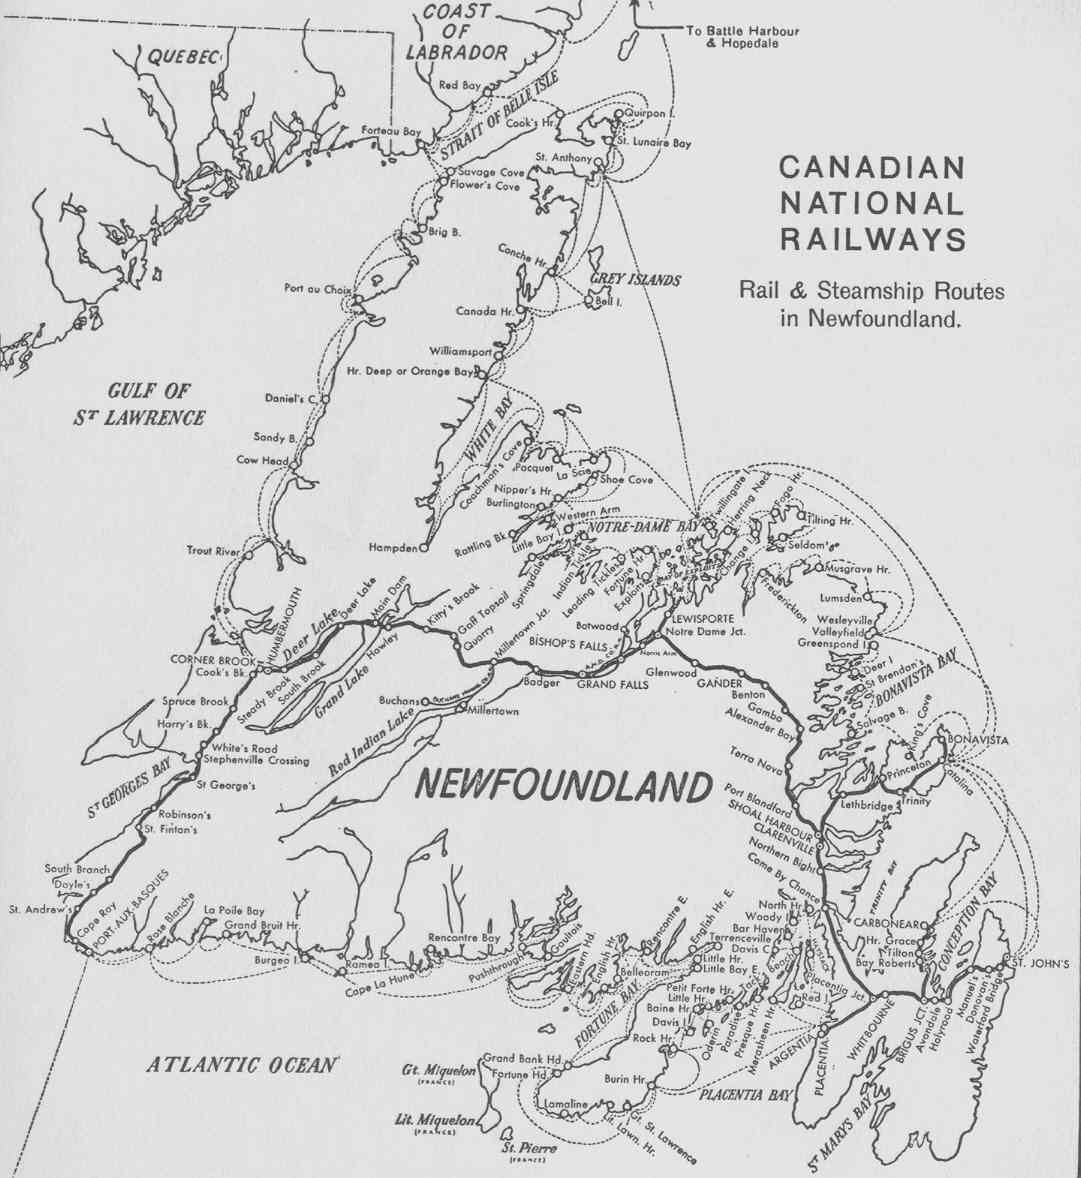 Newfoundland: CNR steamship routes showing coastal transportation patterns